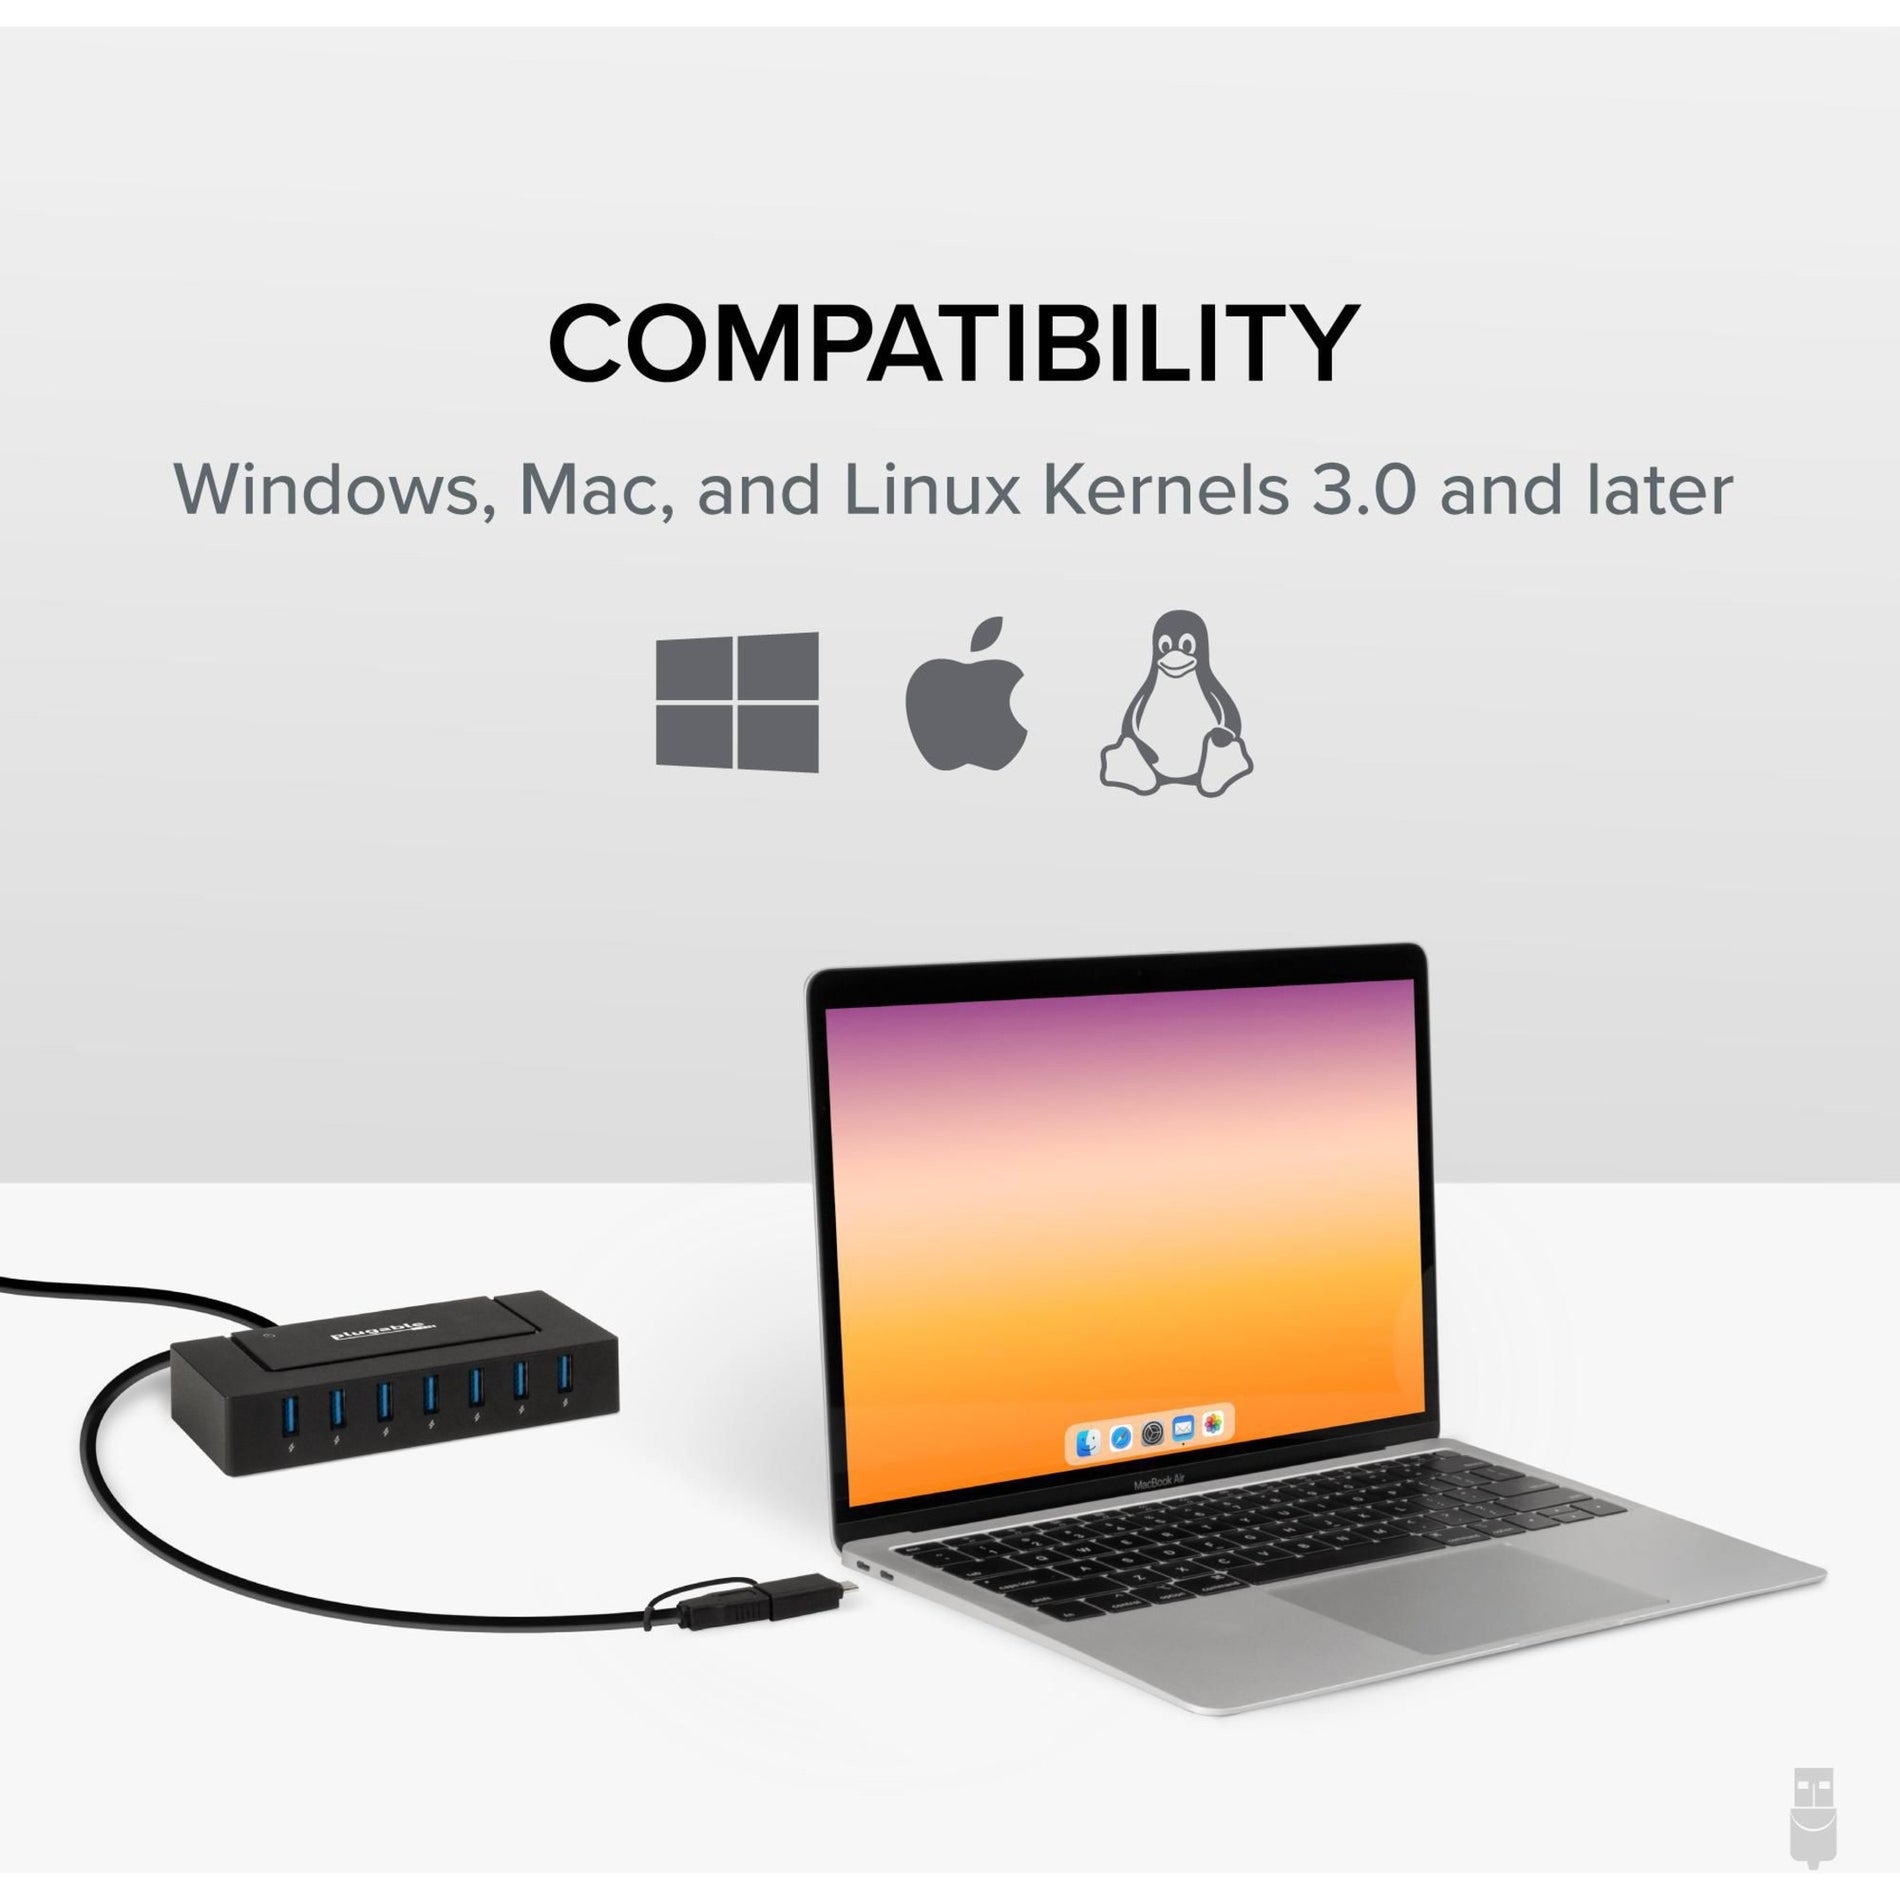 Plugable USBC-HUB7BC USB 3.0 UND USB-C 7-PORT LADEHUB 2 Jahre Garantie Mac/PC/Linux Kompatibel